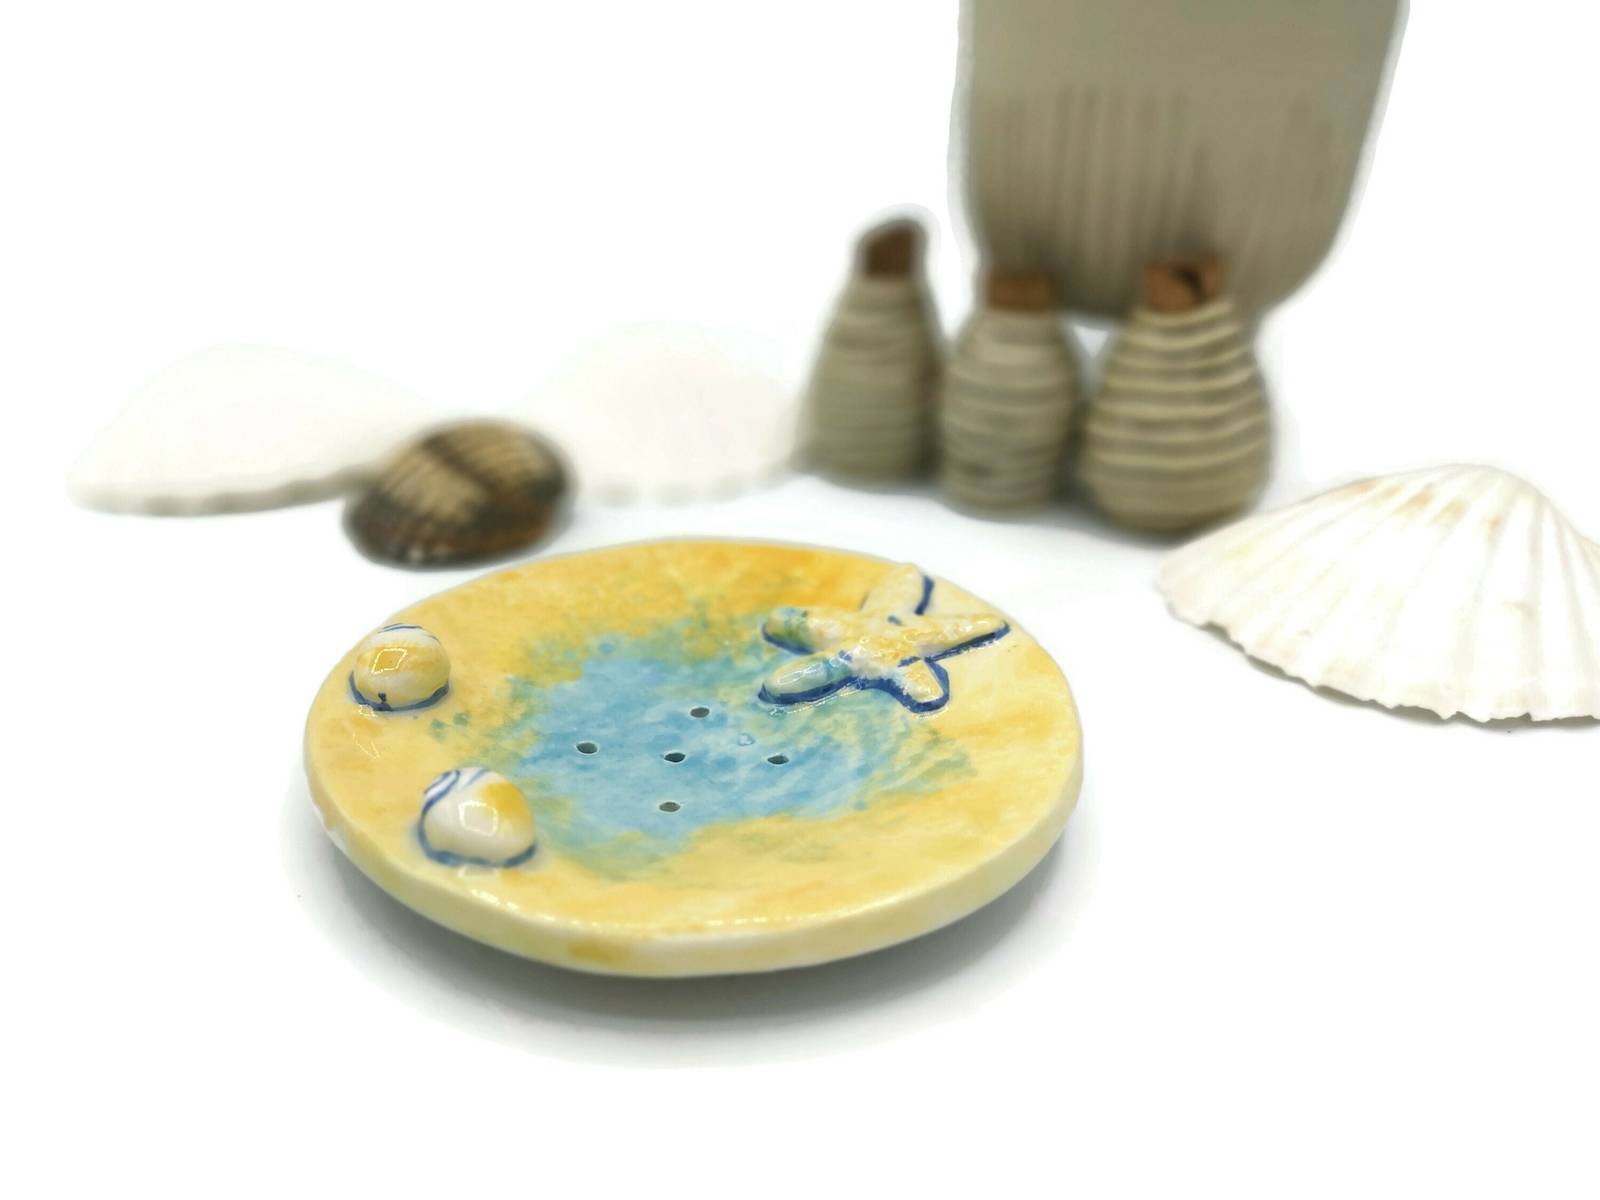 Starfish Ceramic Self Draining Soap Dish, Starfish Soap Dish/Sponge Holder